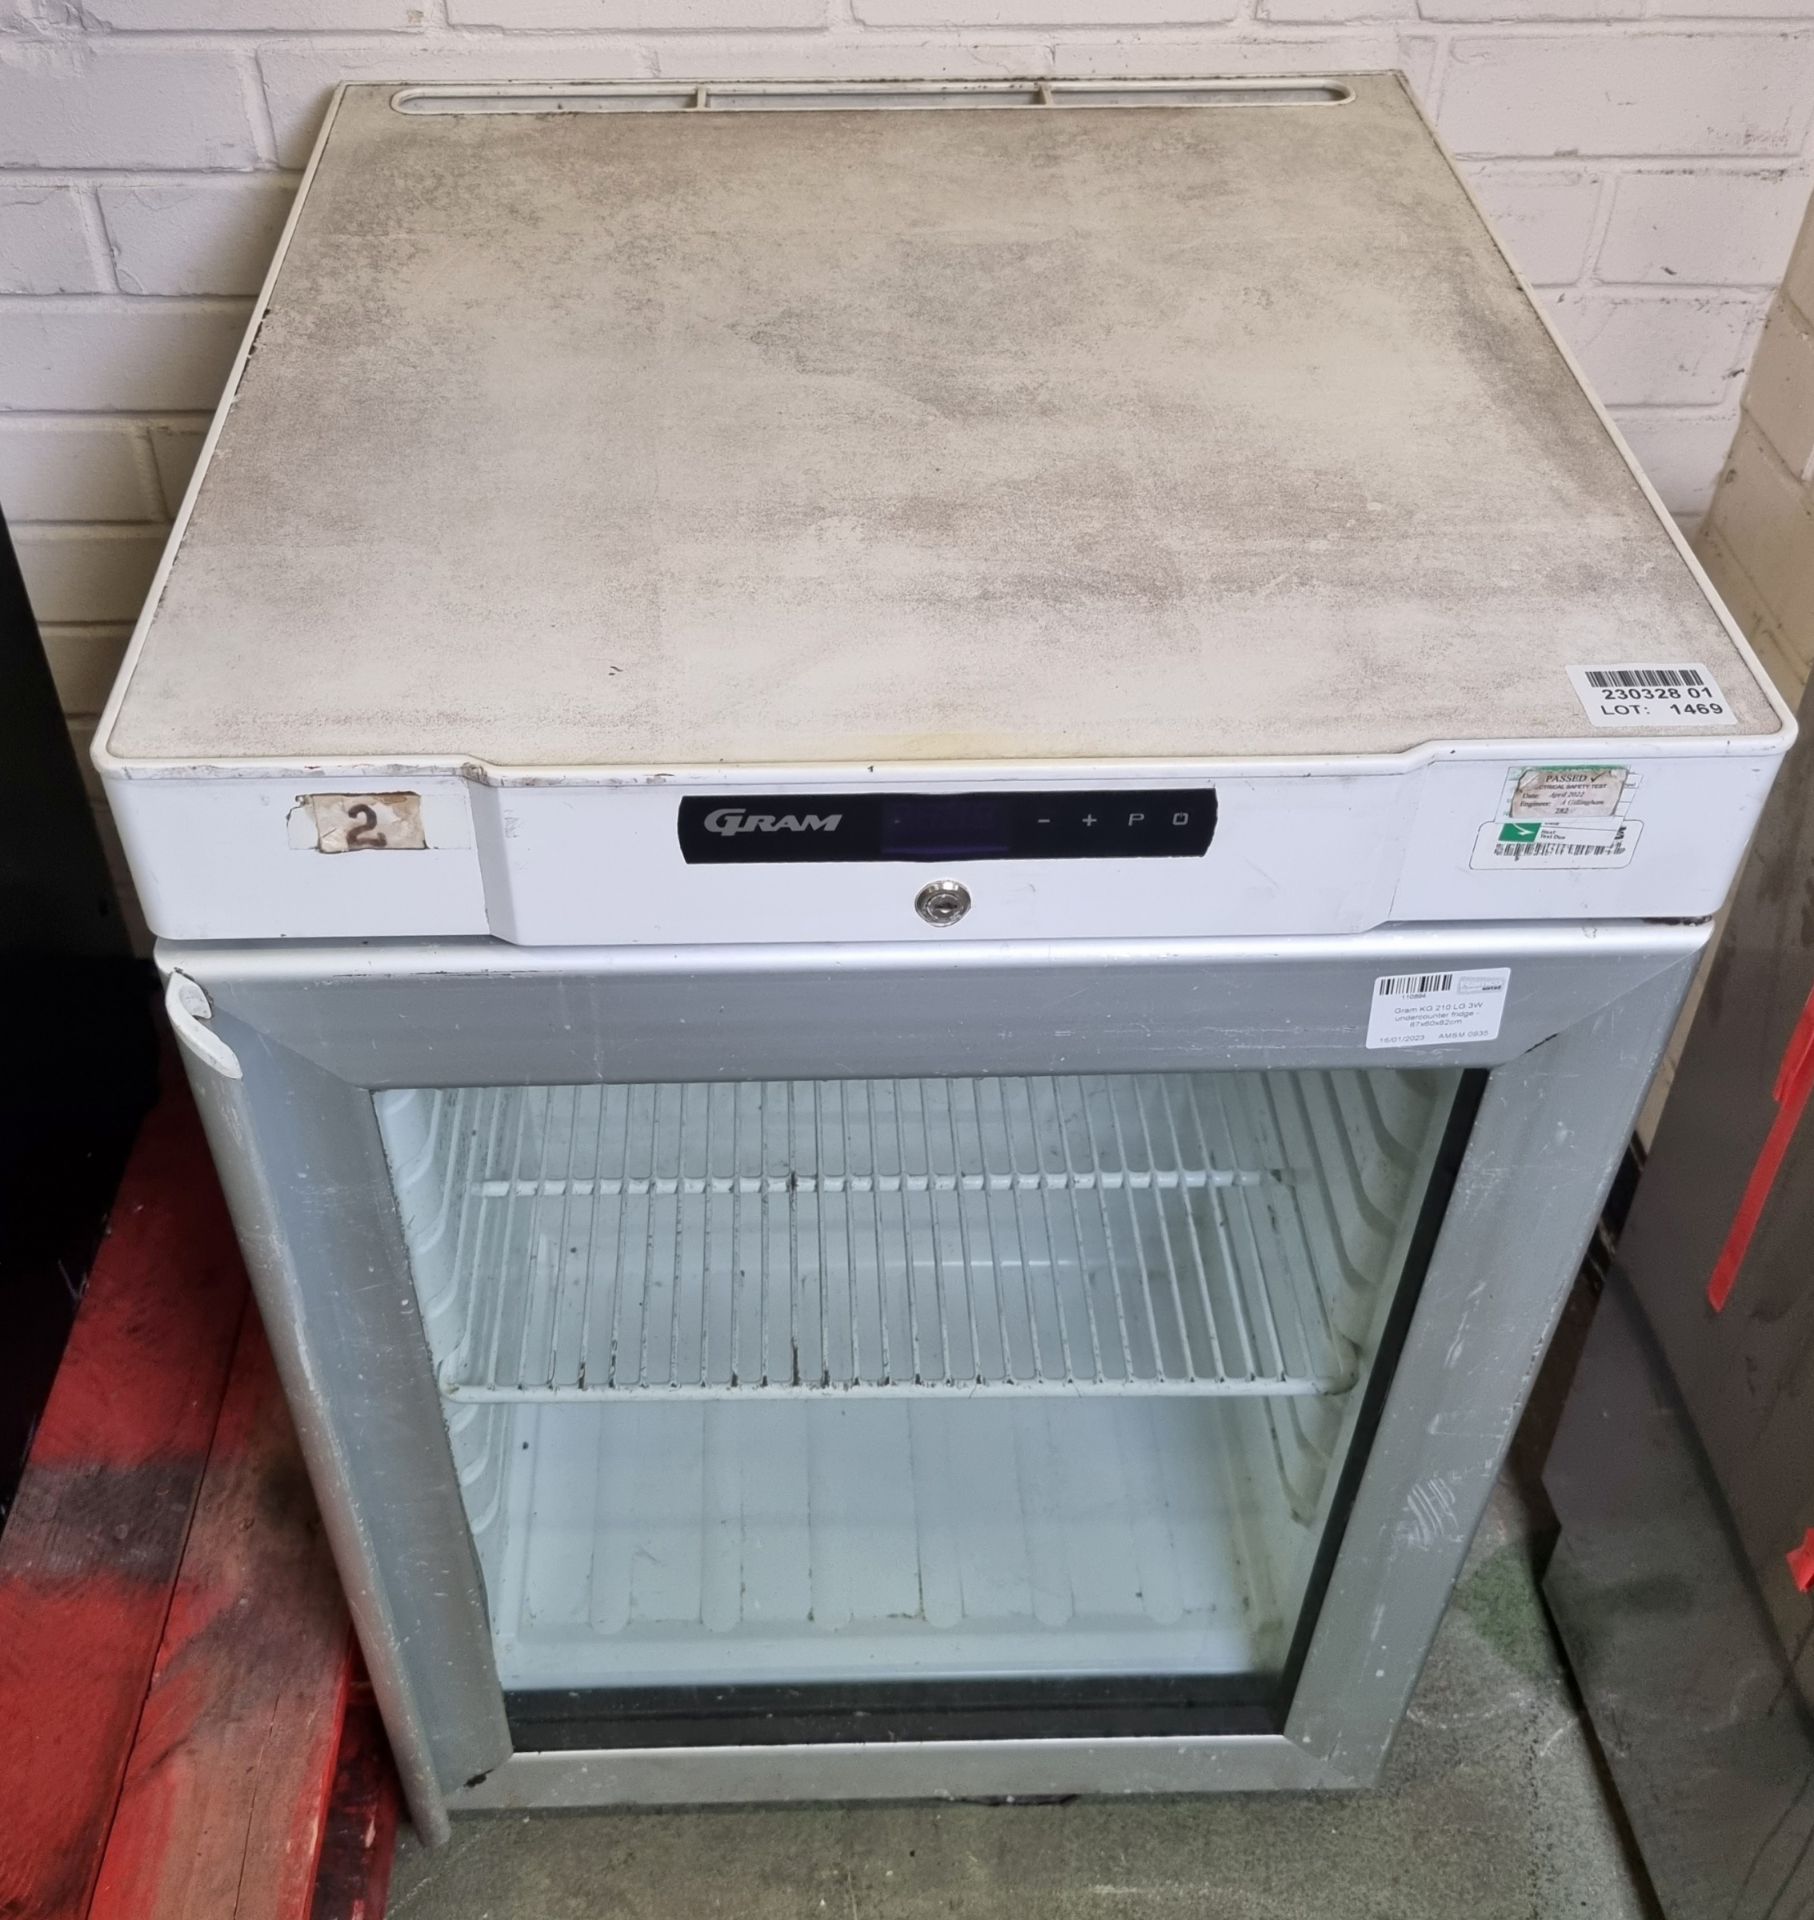 Gram KG 210 LG 3W undercounter fridge - 67 x 60 x 82cm - Image 2 of 5